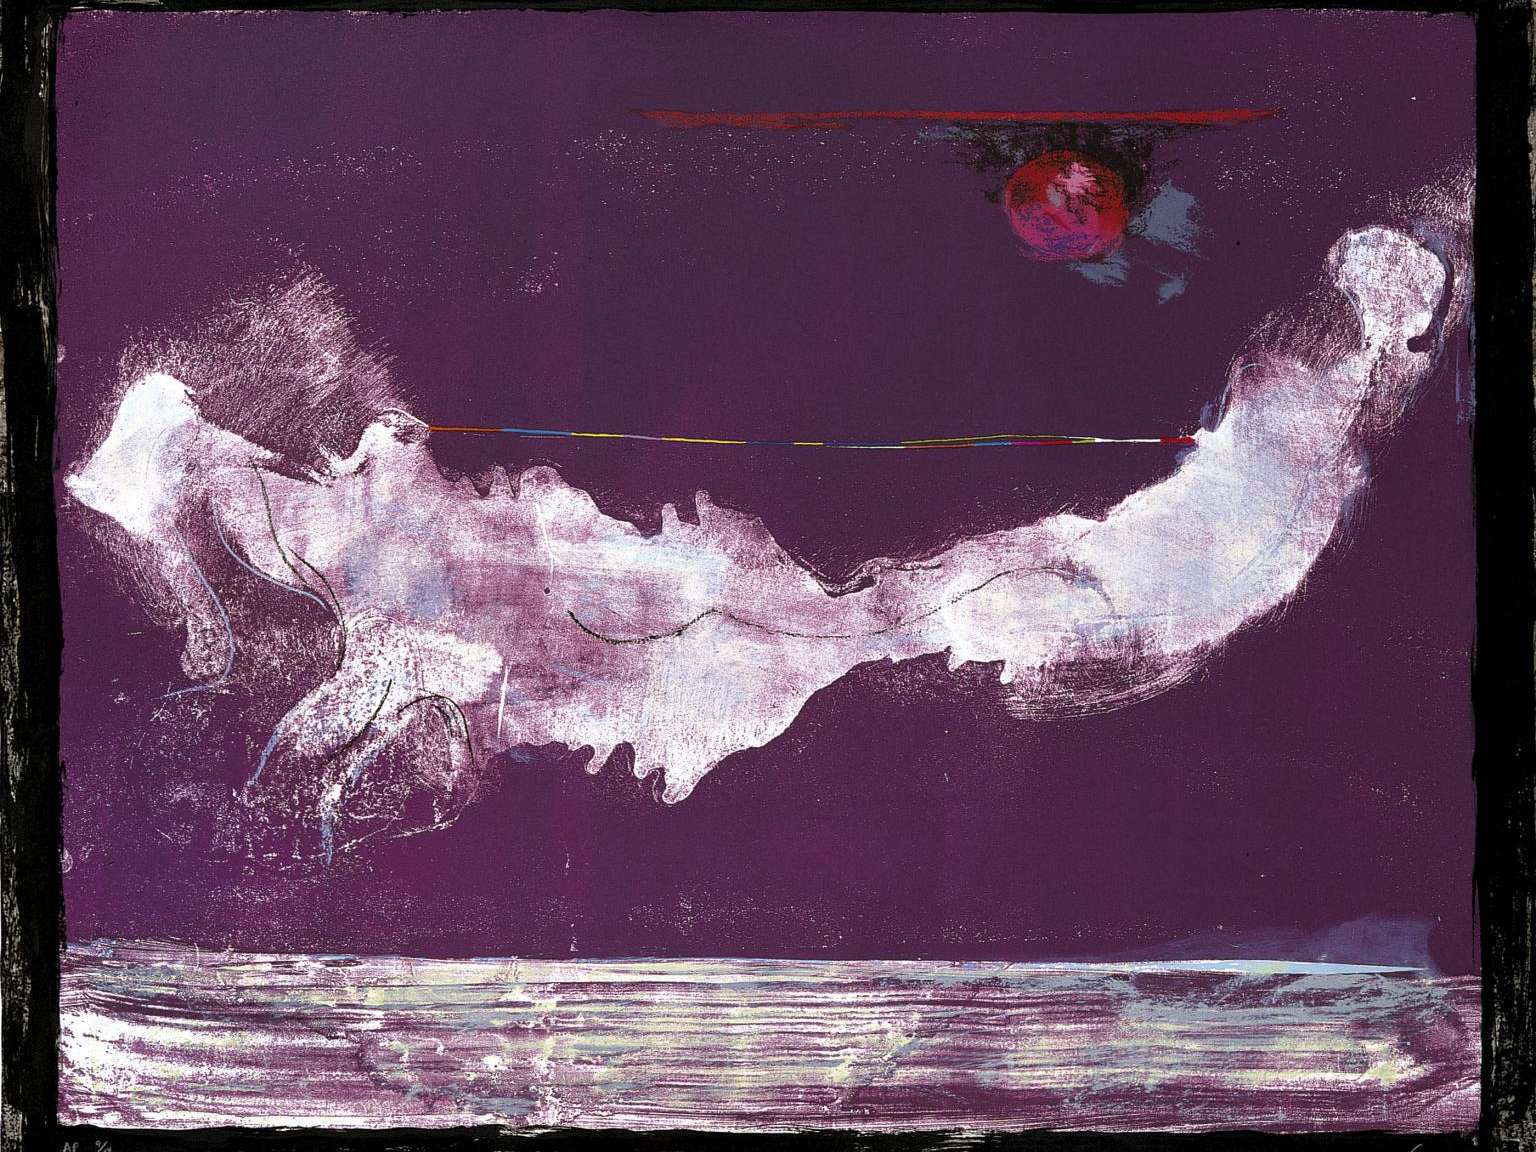 Mirabelle (1990) by Helen Frankenthaler